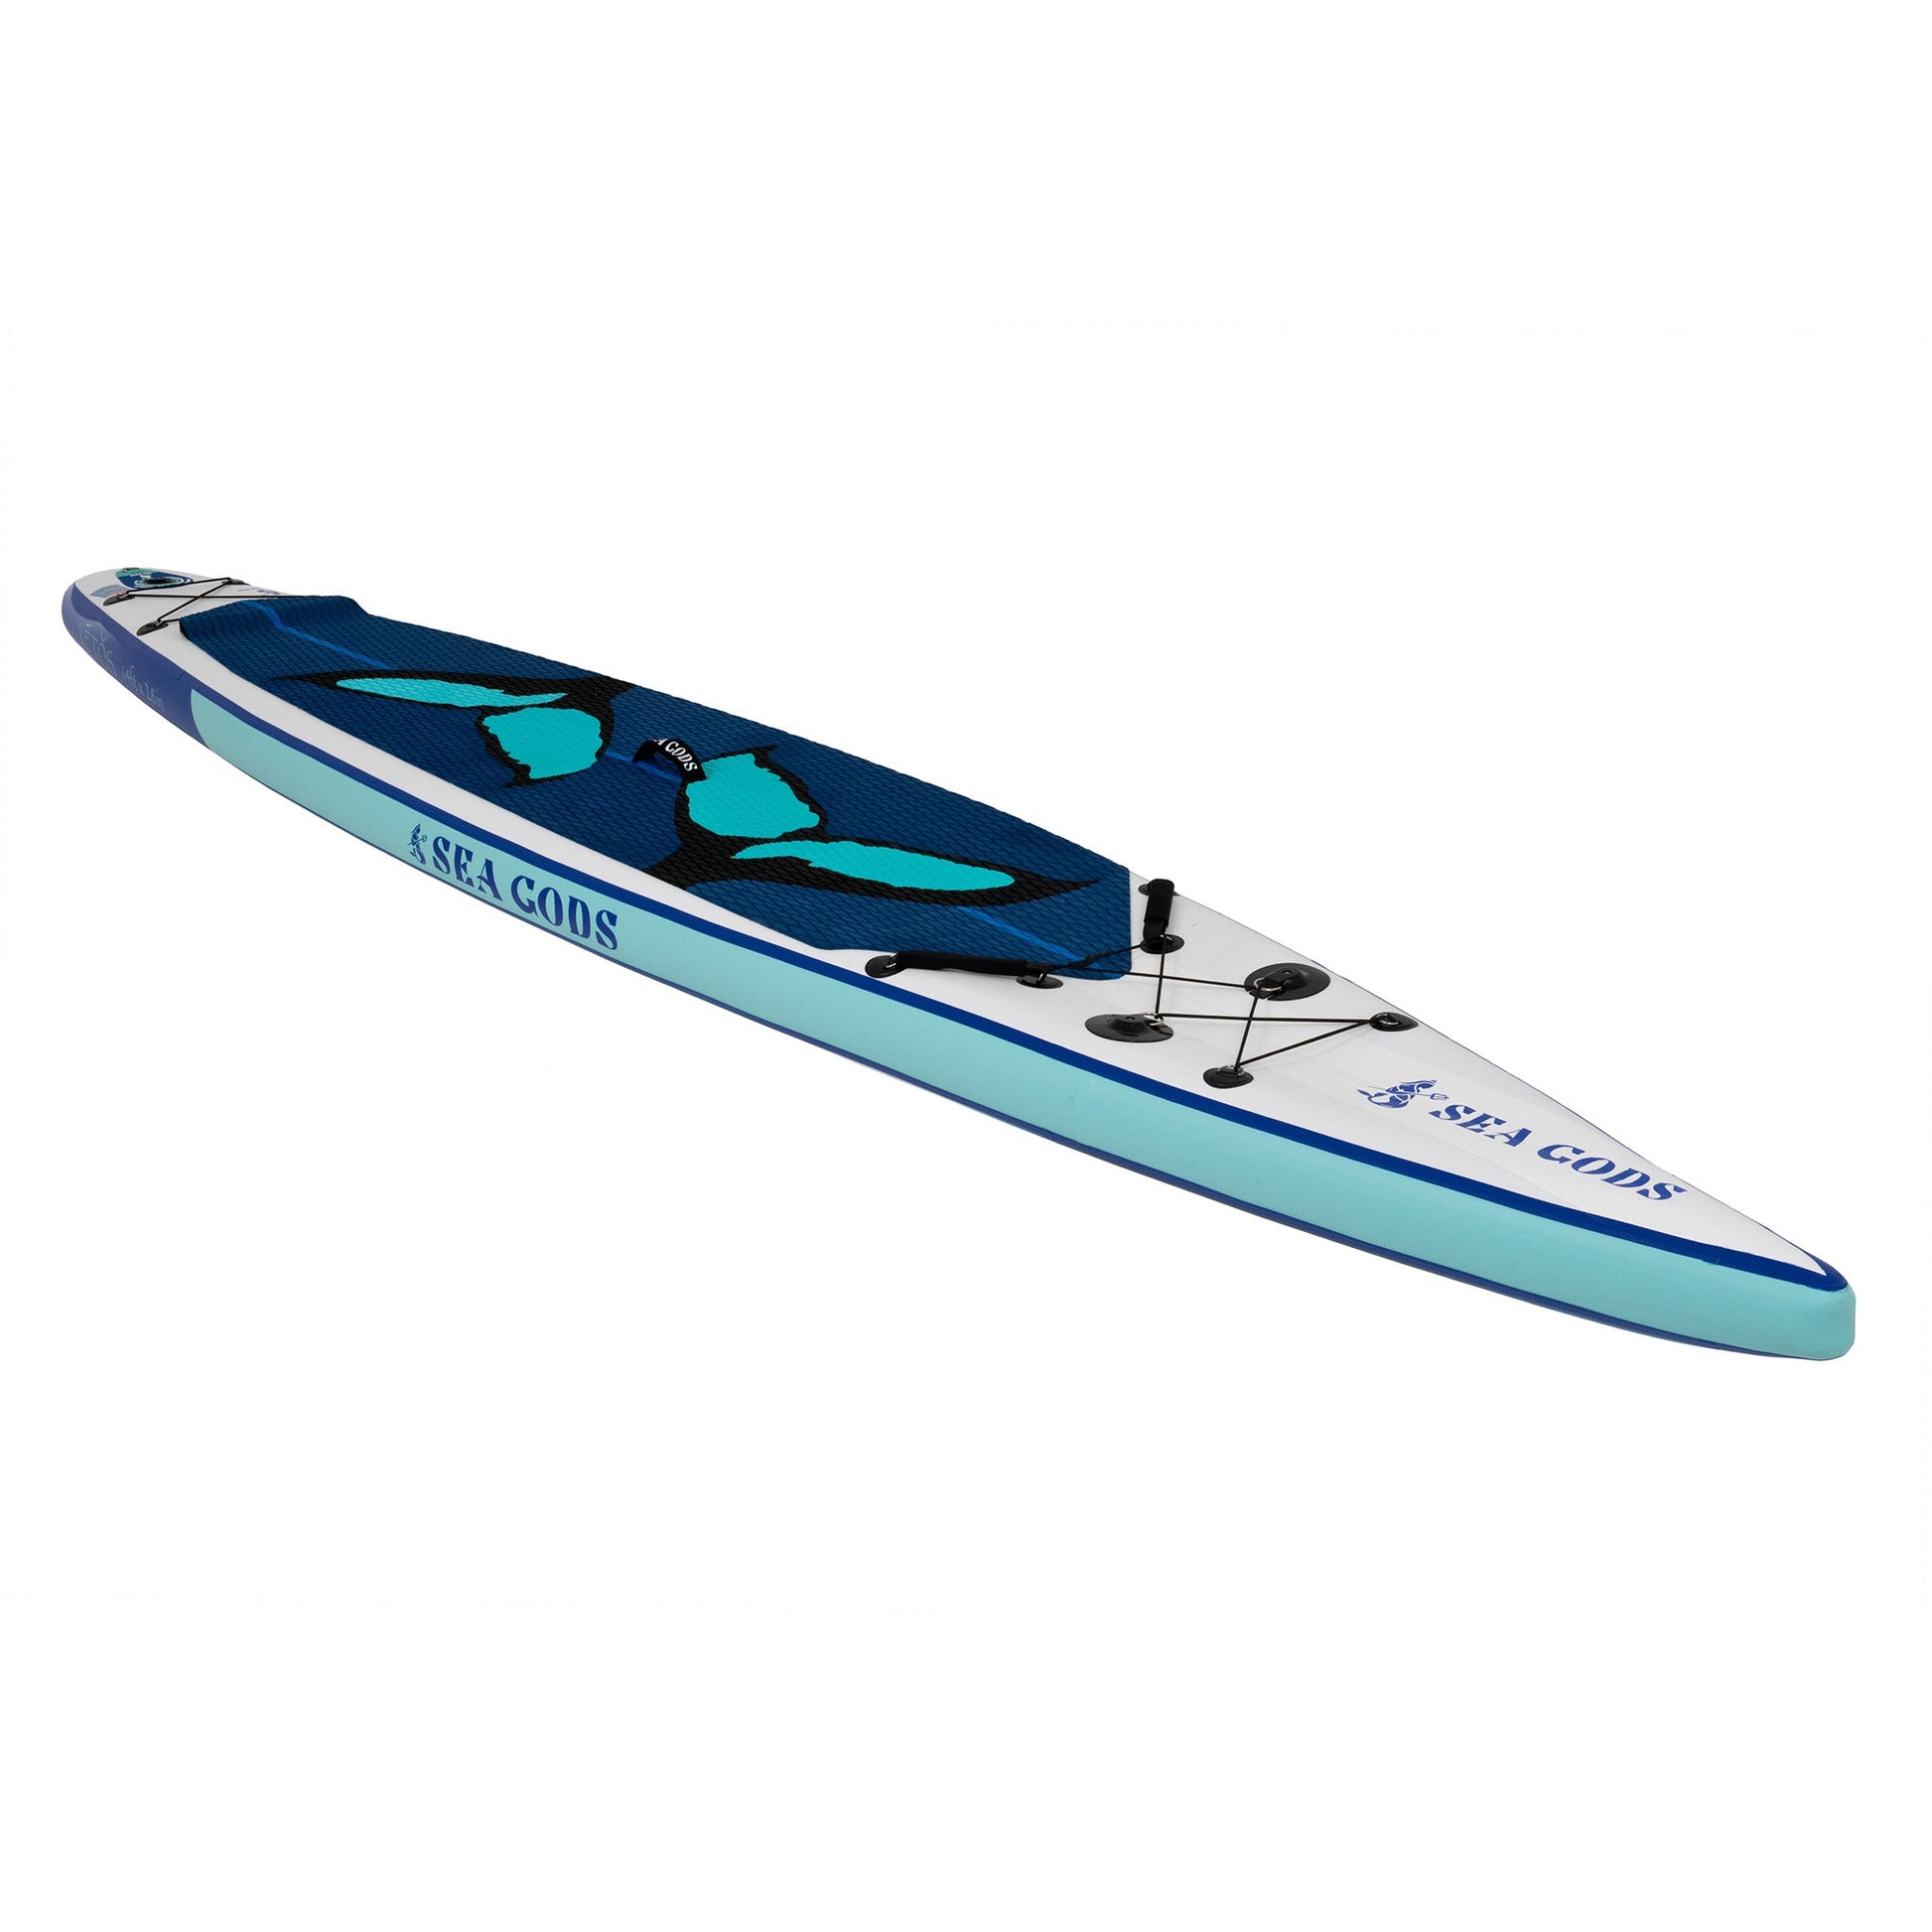 Racing SUP Paddle Board | KETOS by Sea Godsin Australia